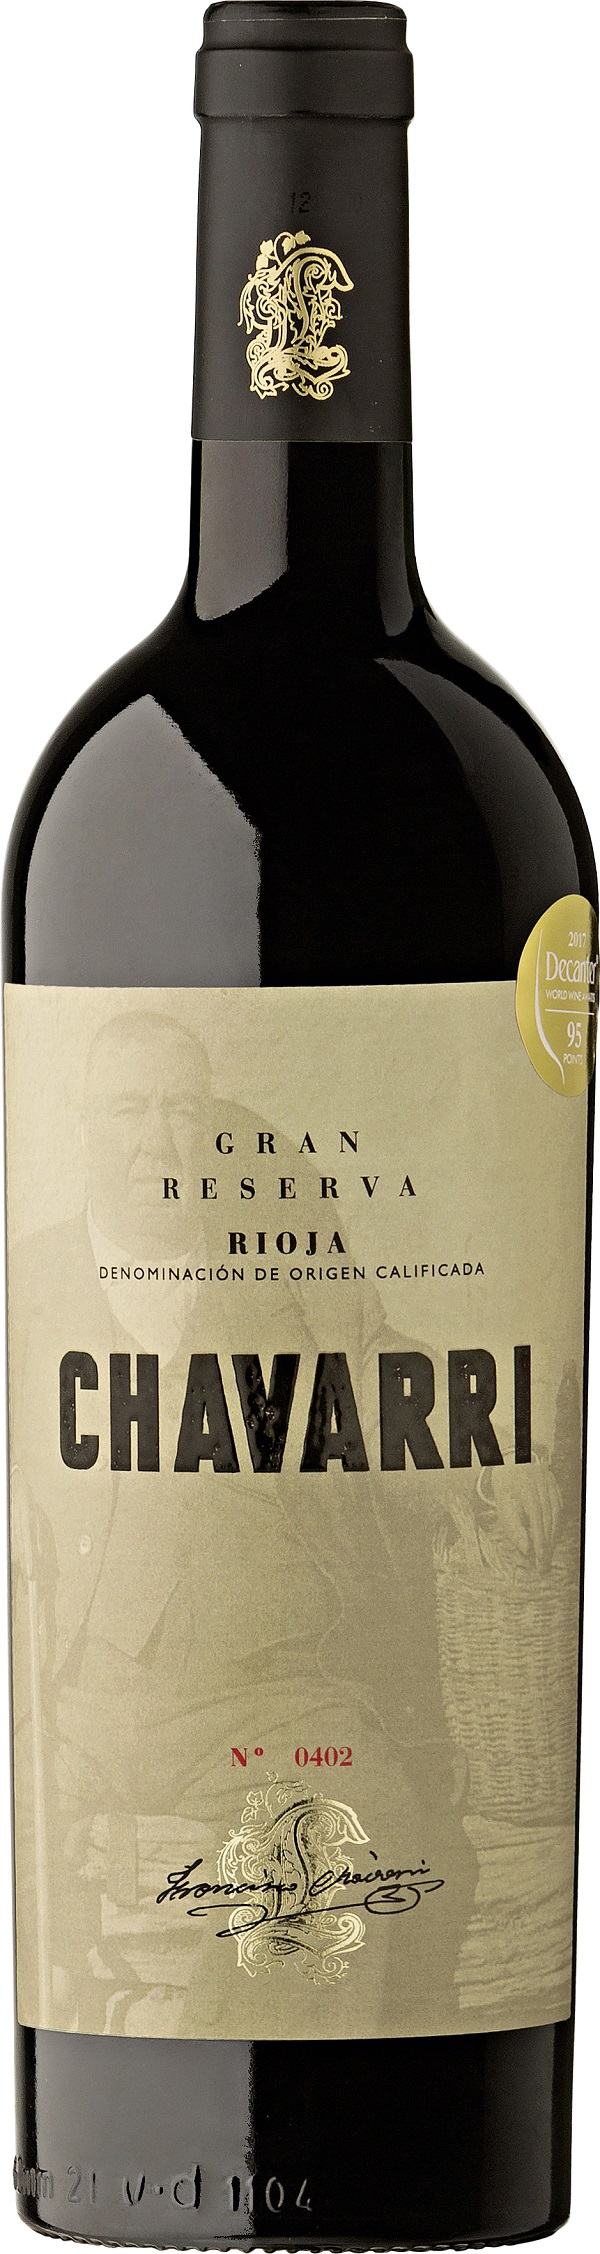 Chavarri Rioja Gran Reserva